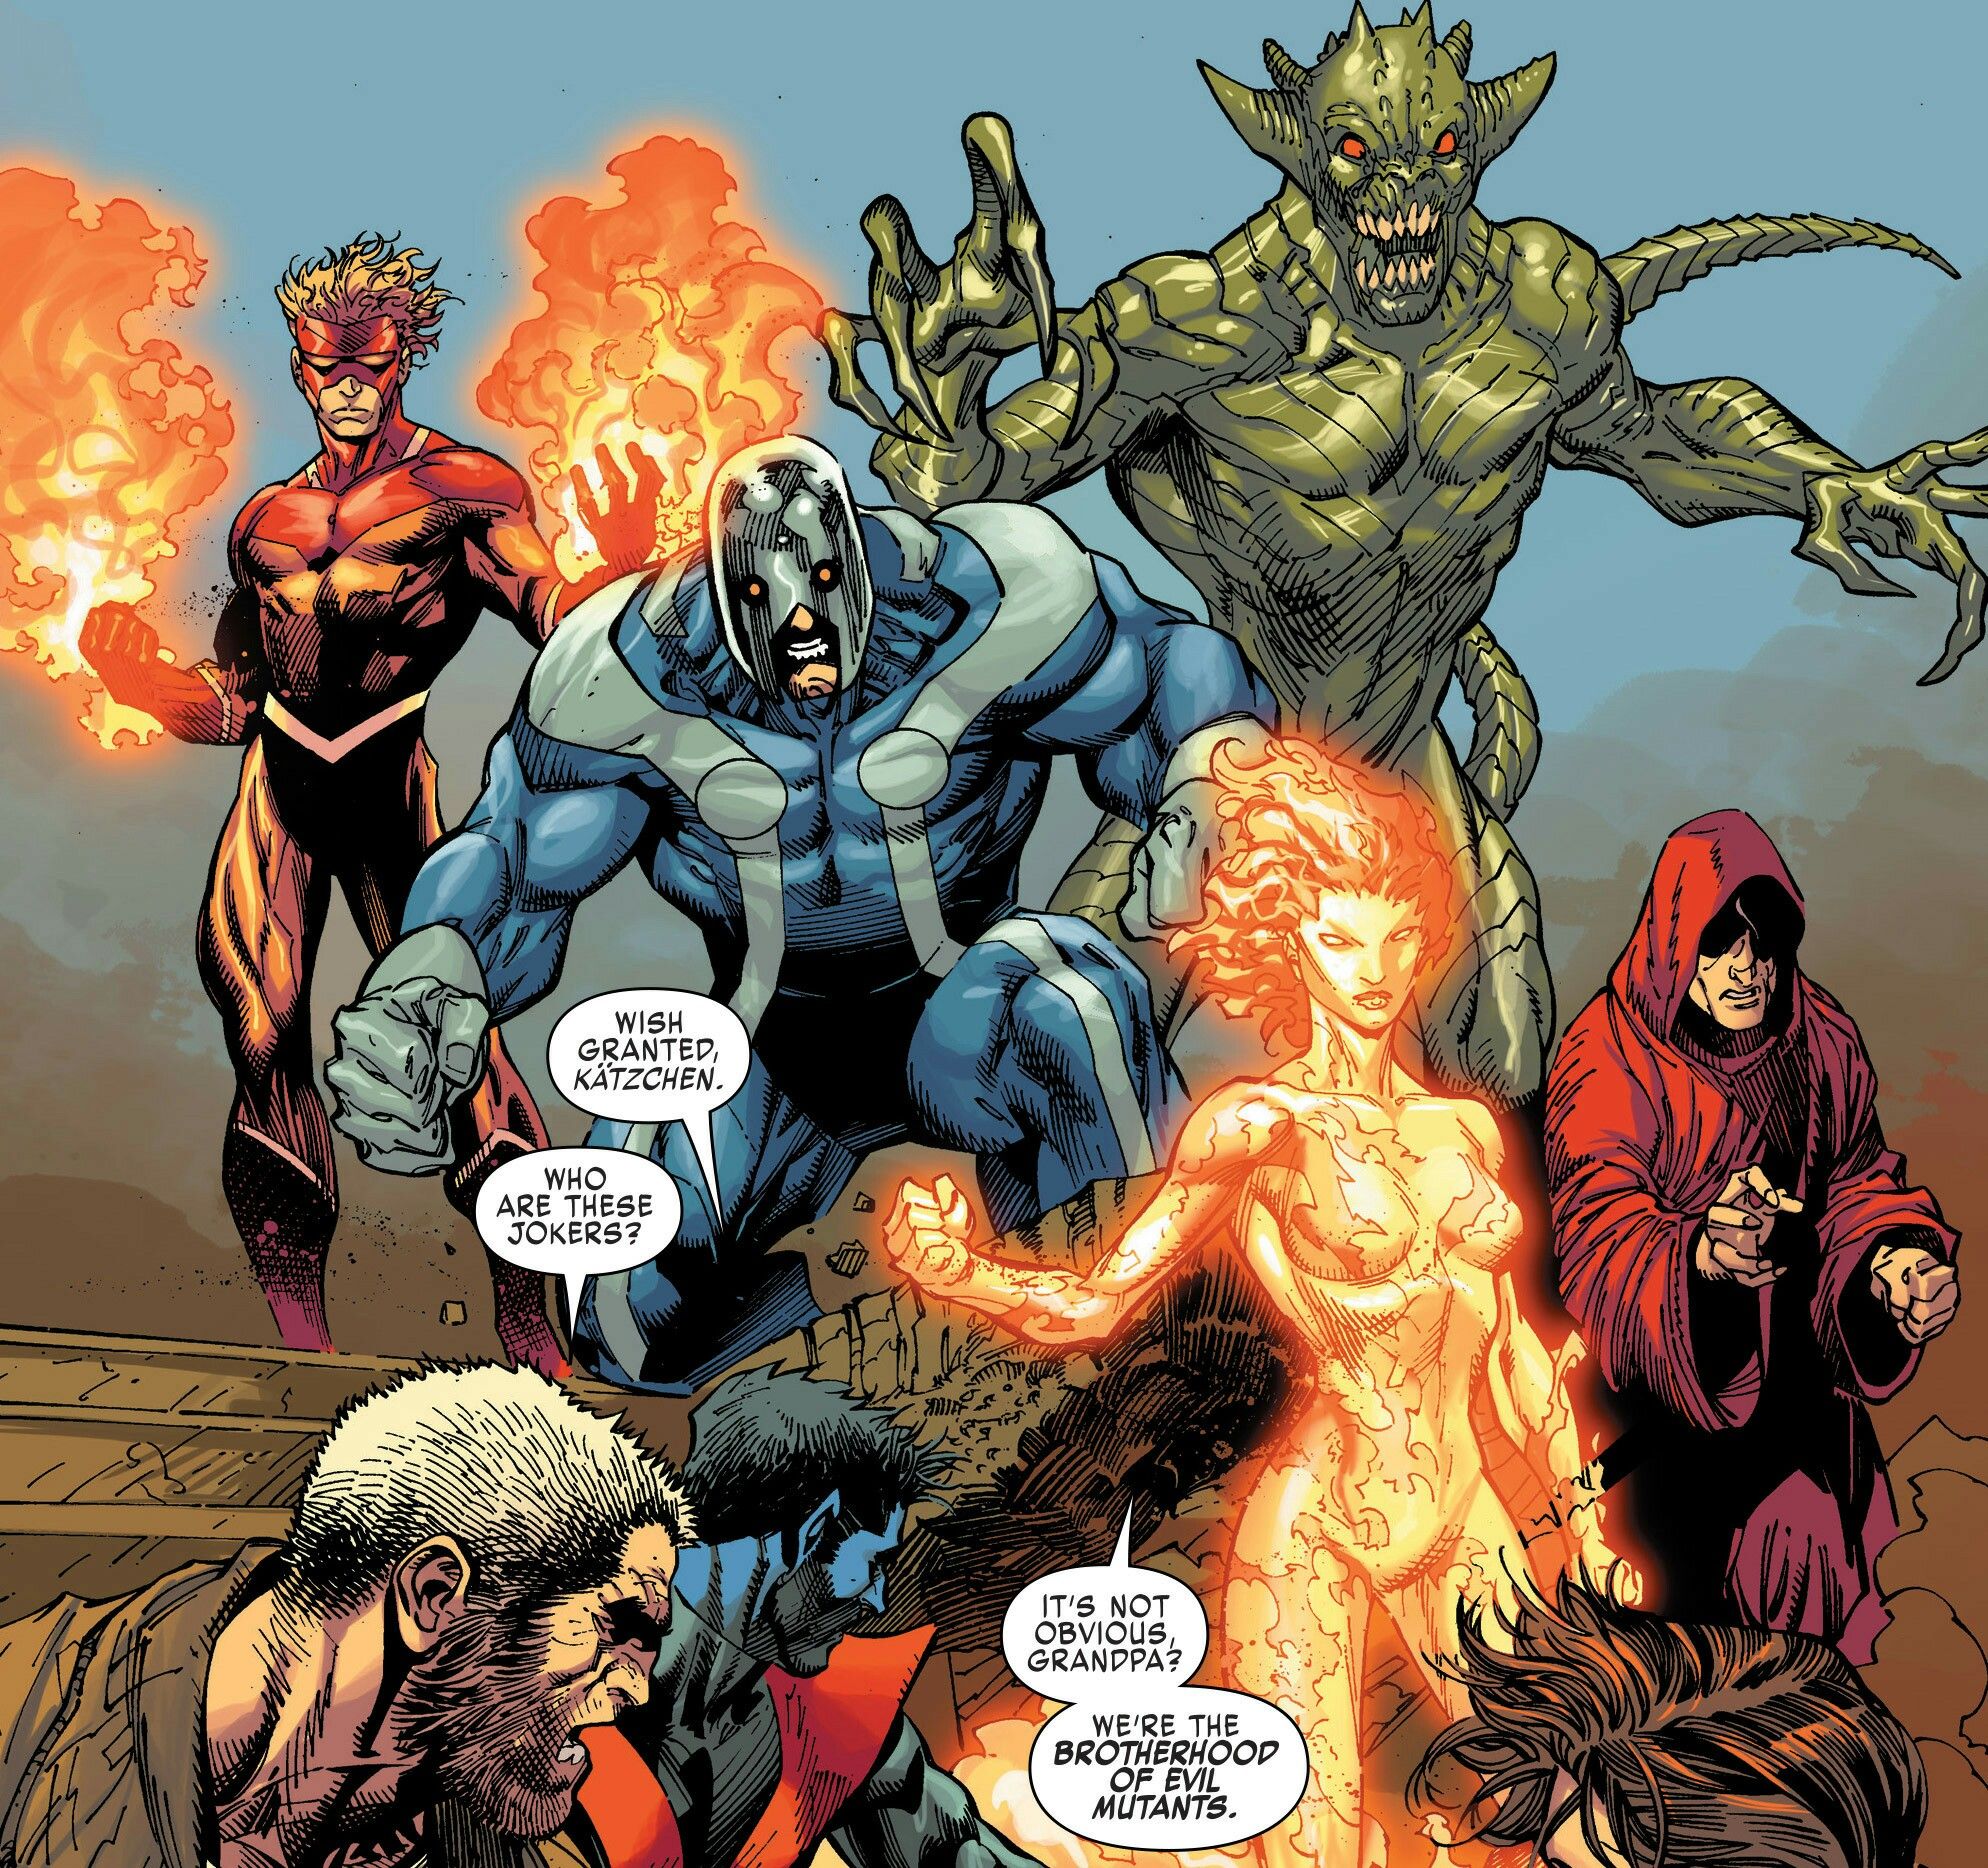 The Original Brotherhood Of Mutants